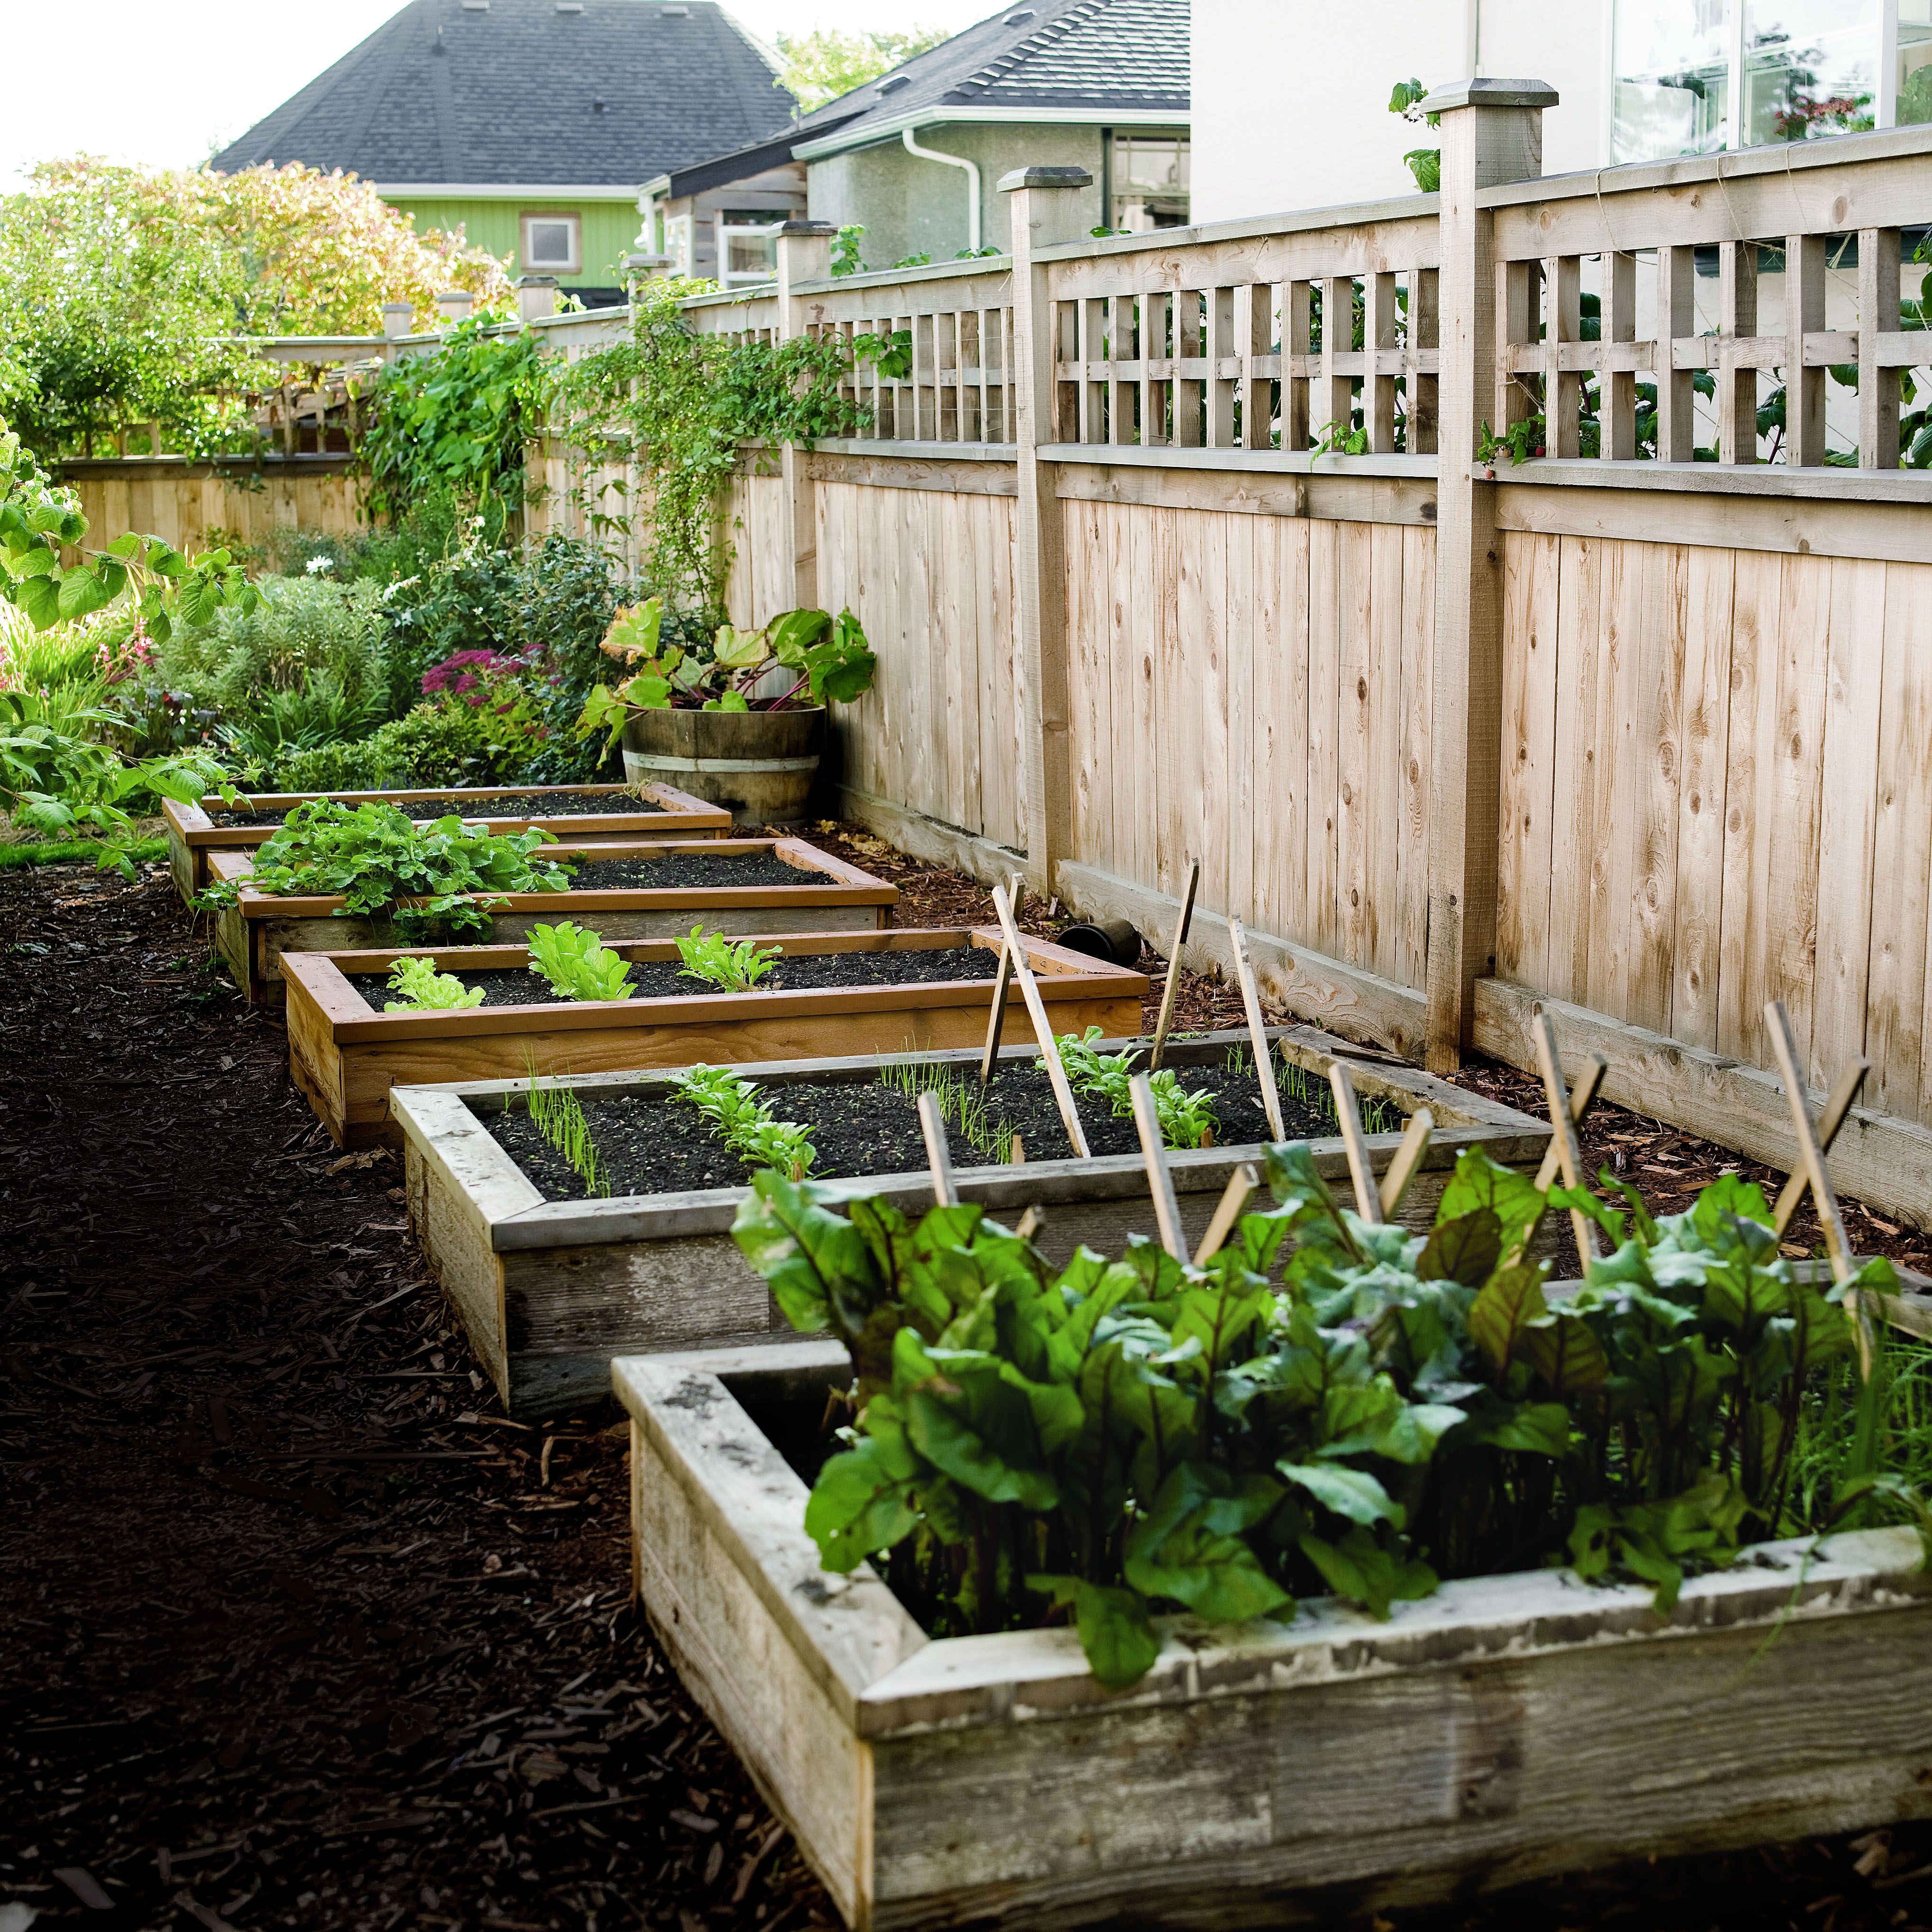 How To Start a Garden Build This Raised Garden Bed